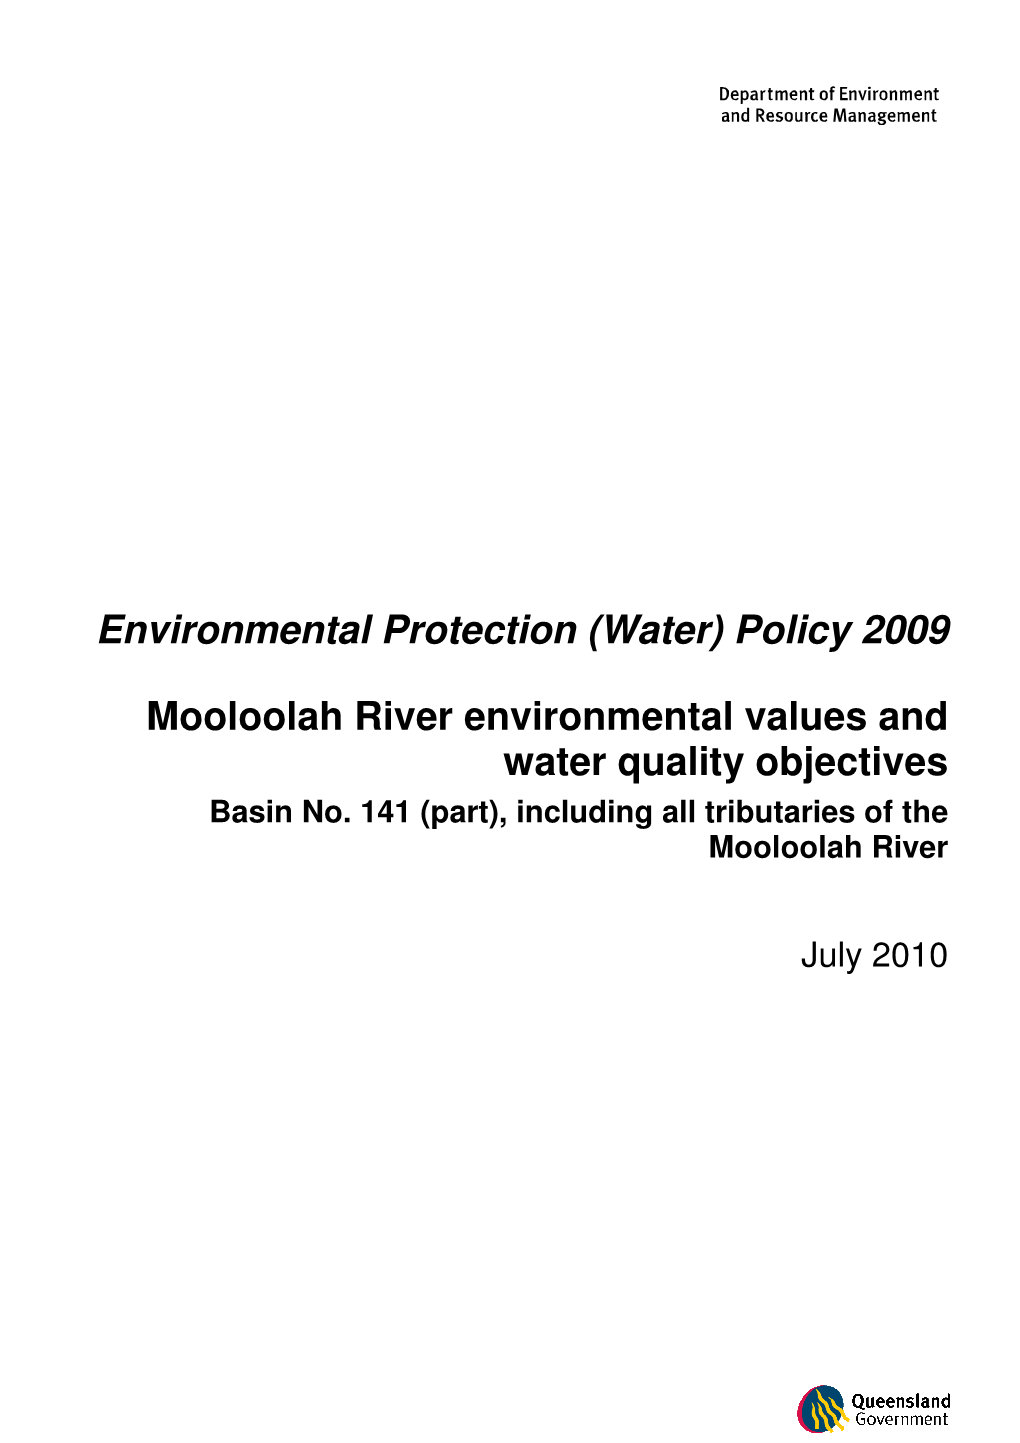 Mooloolah River Environmental Values and Water Quality Objectives Basin No